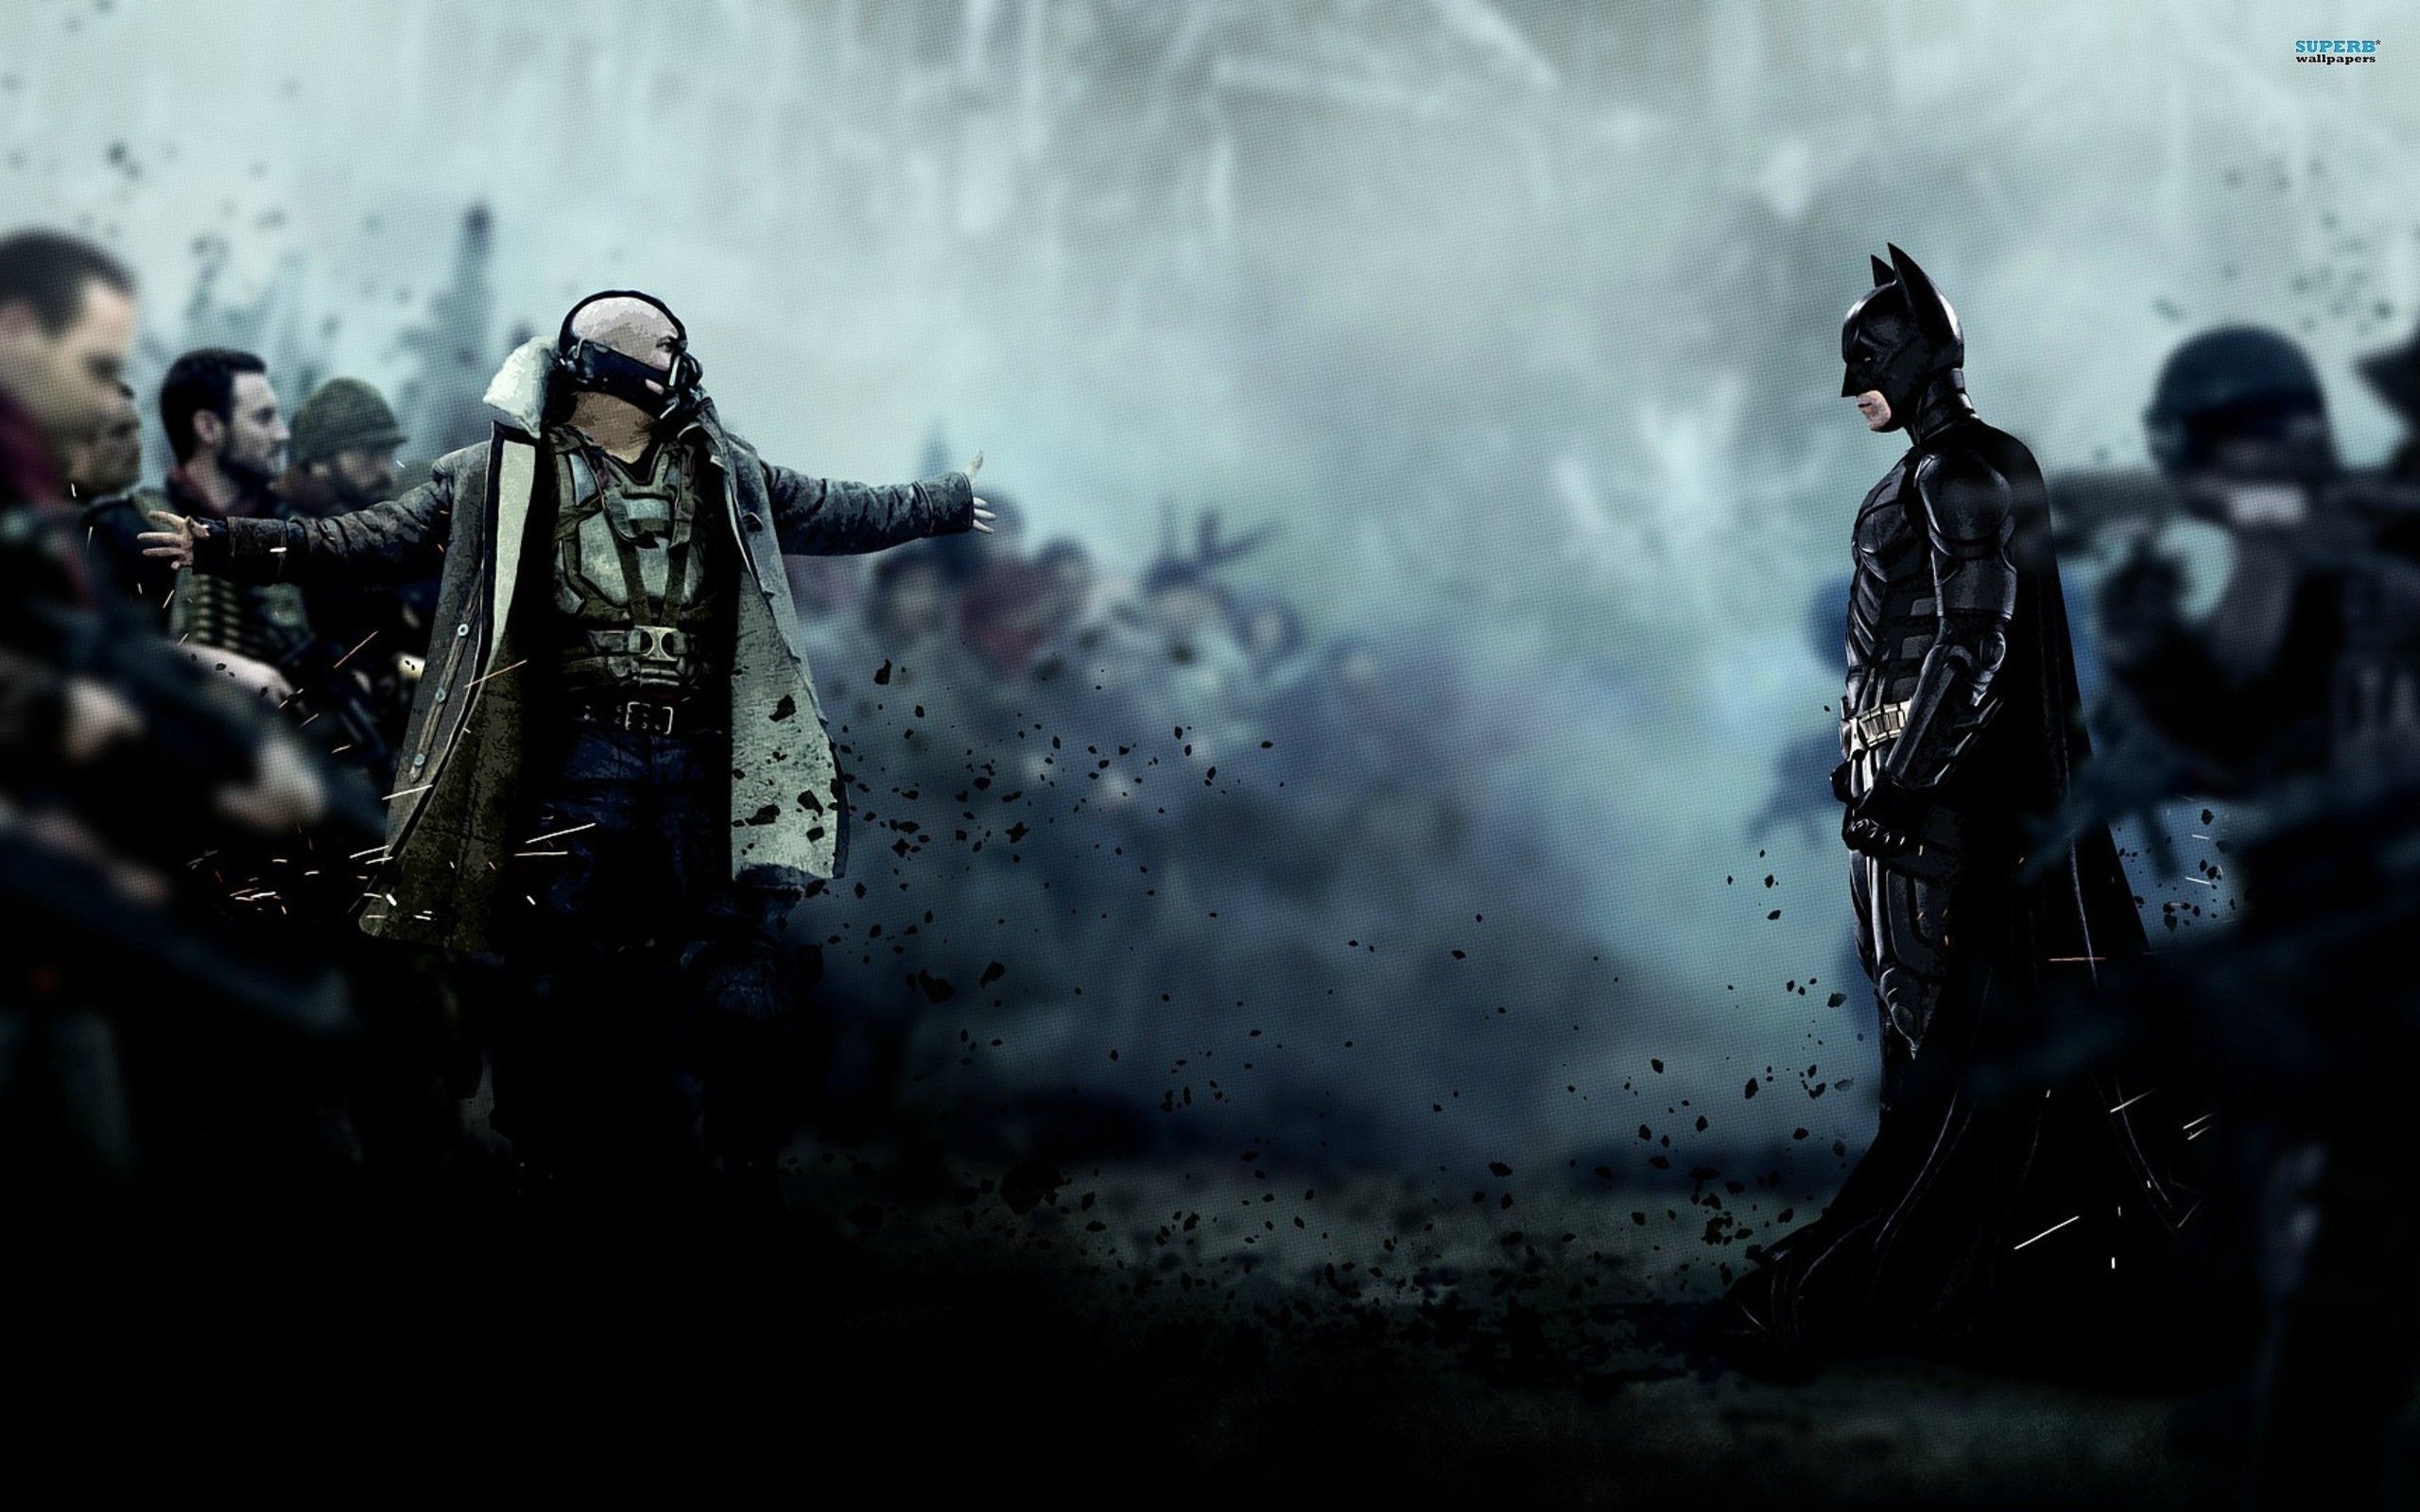 the dark knight rises wallpaper hd bane vs batman